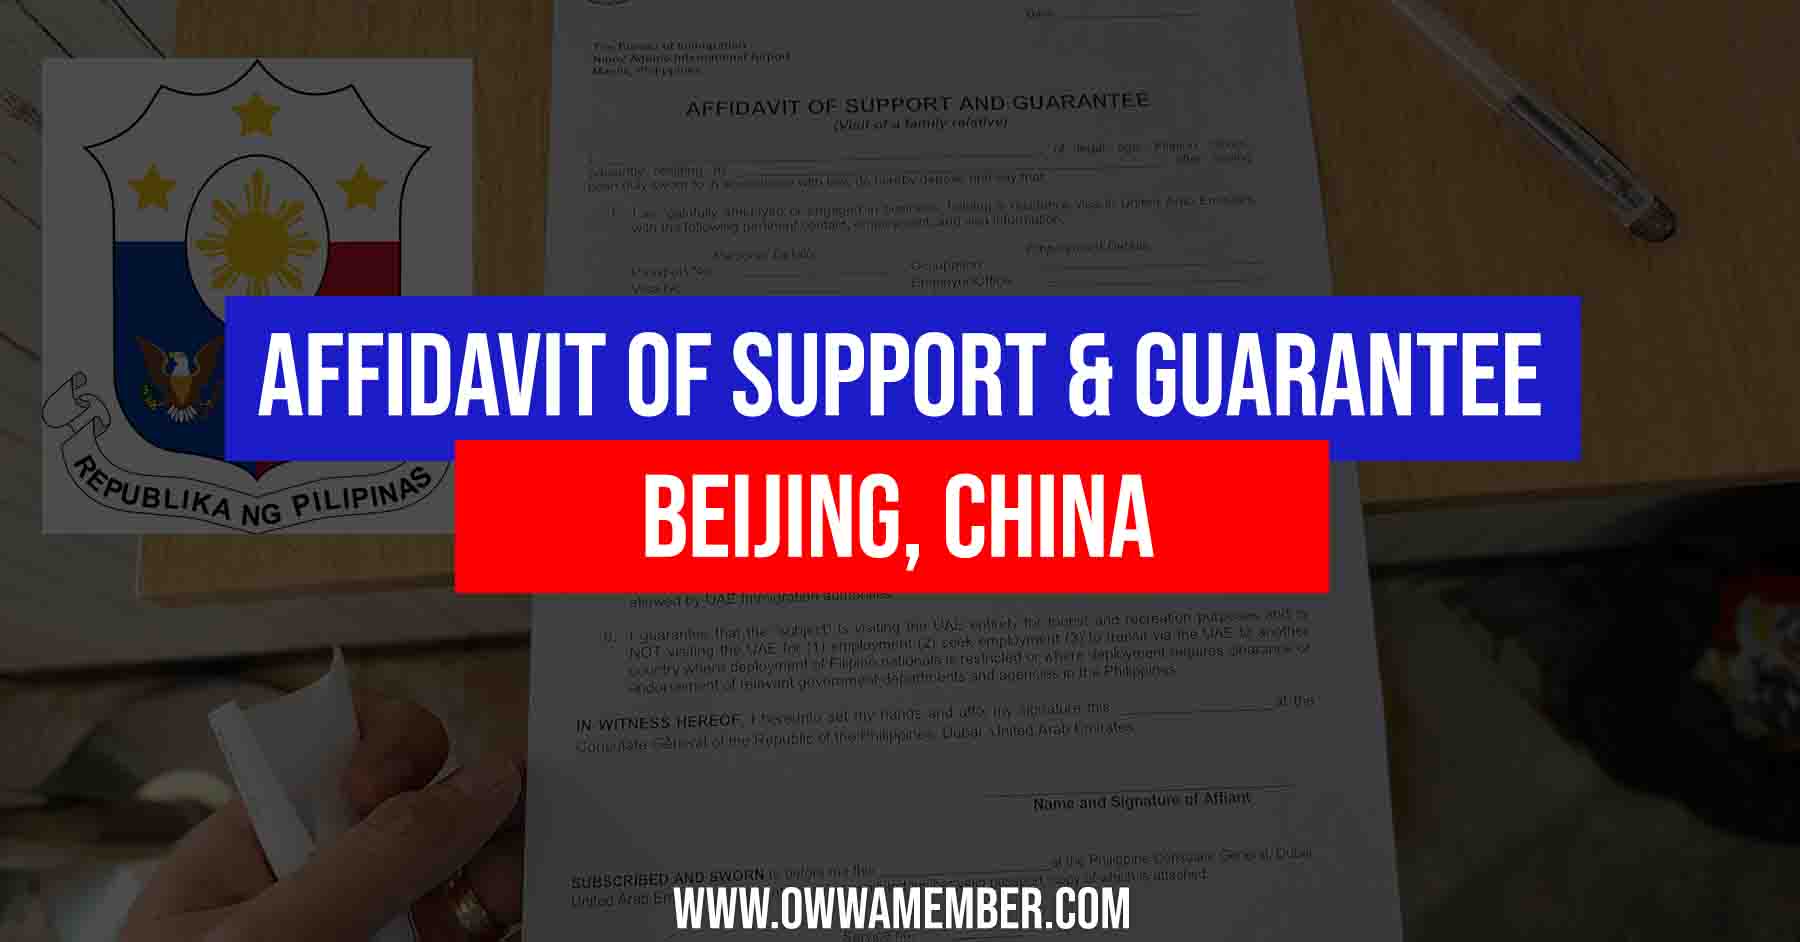 affidavit of support and guarantee beijing china philippine embassy